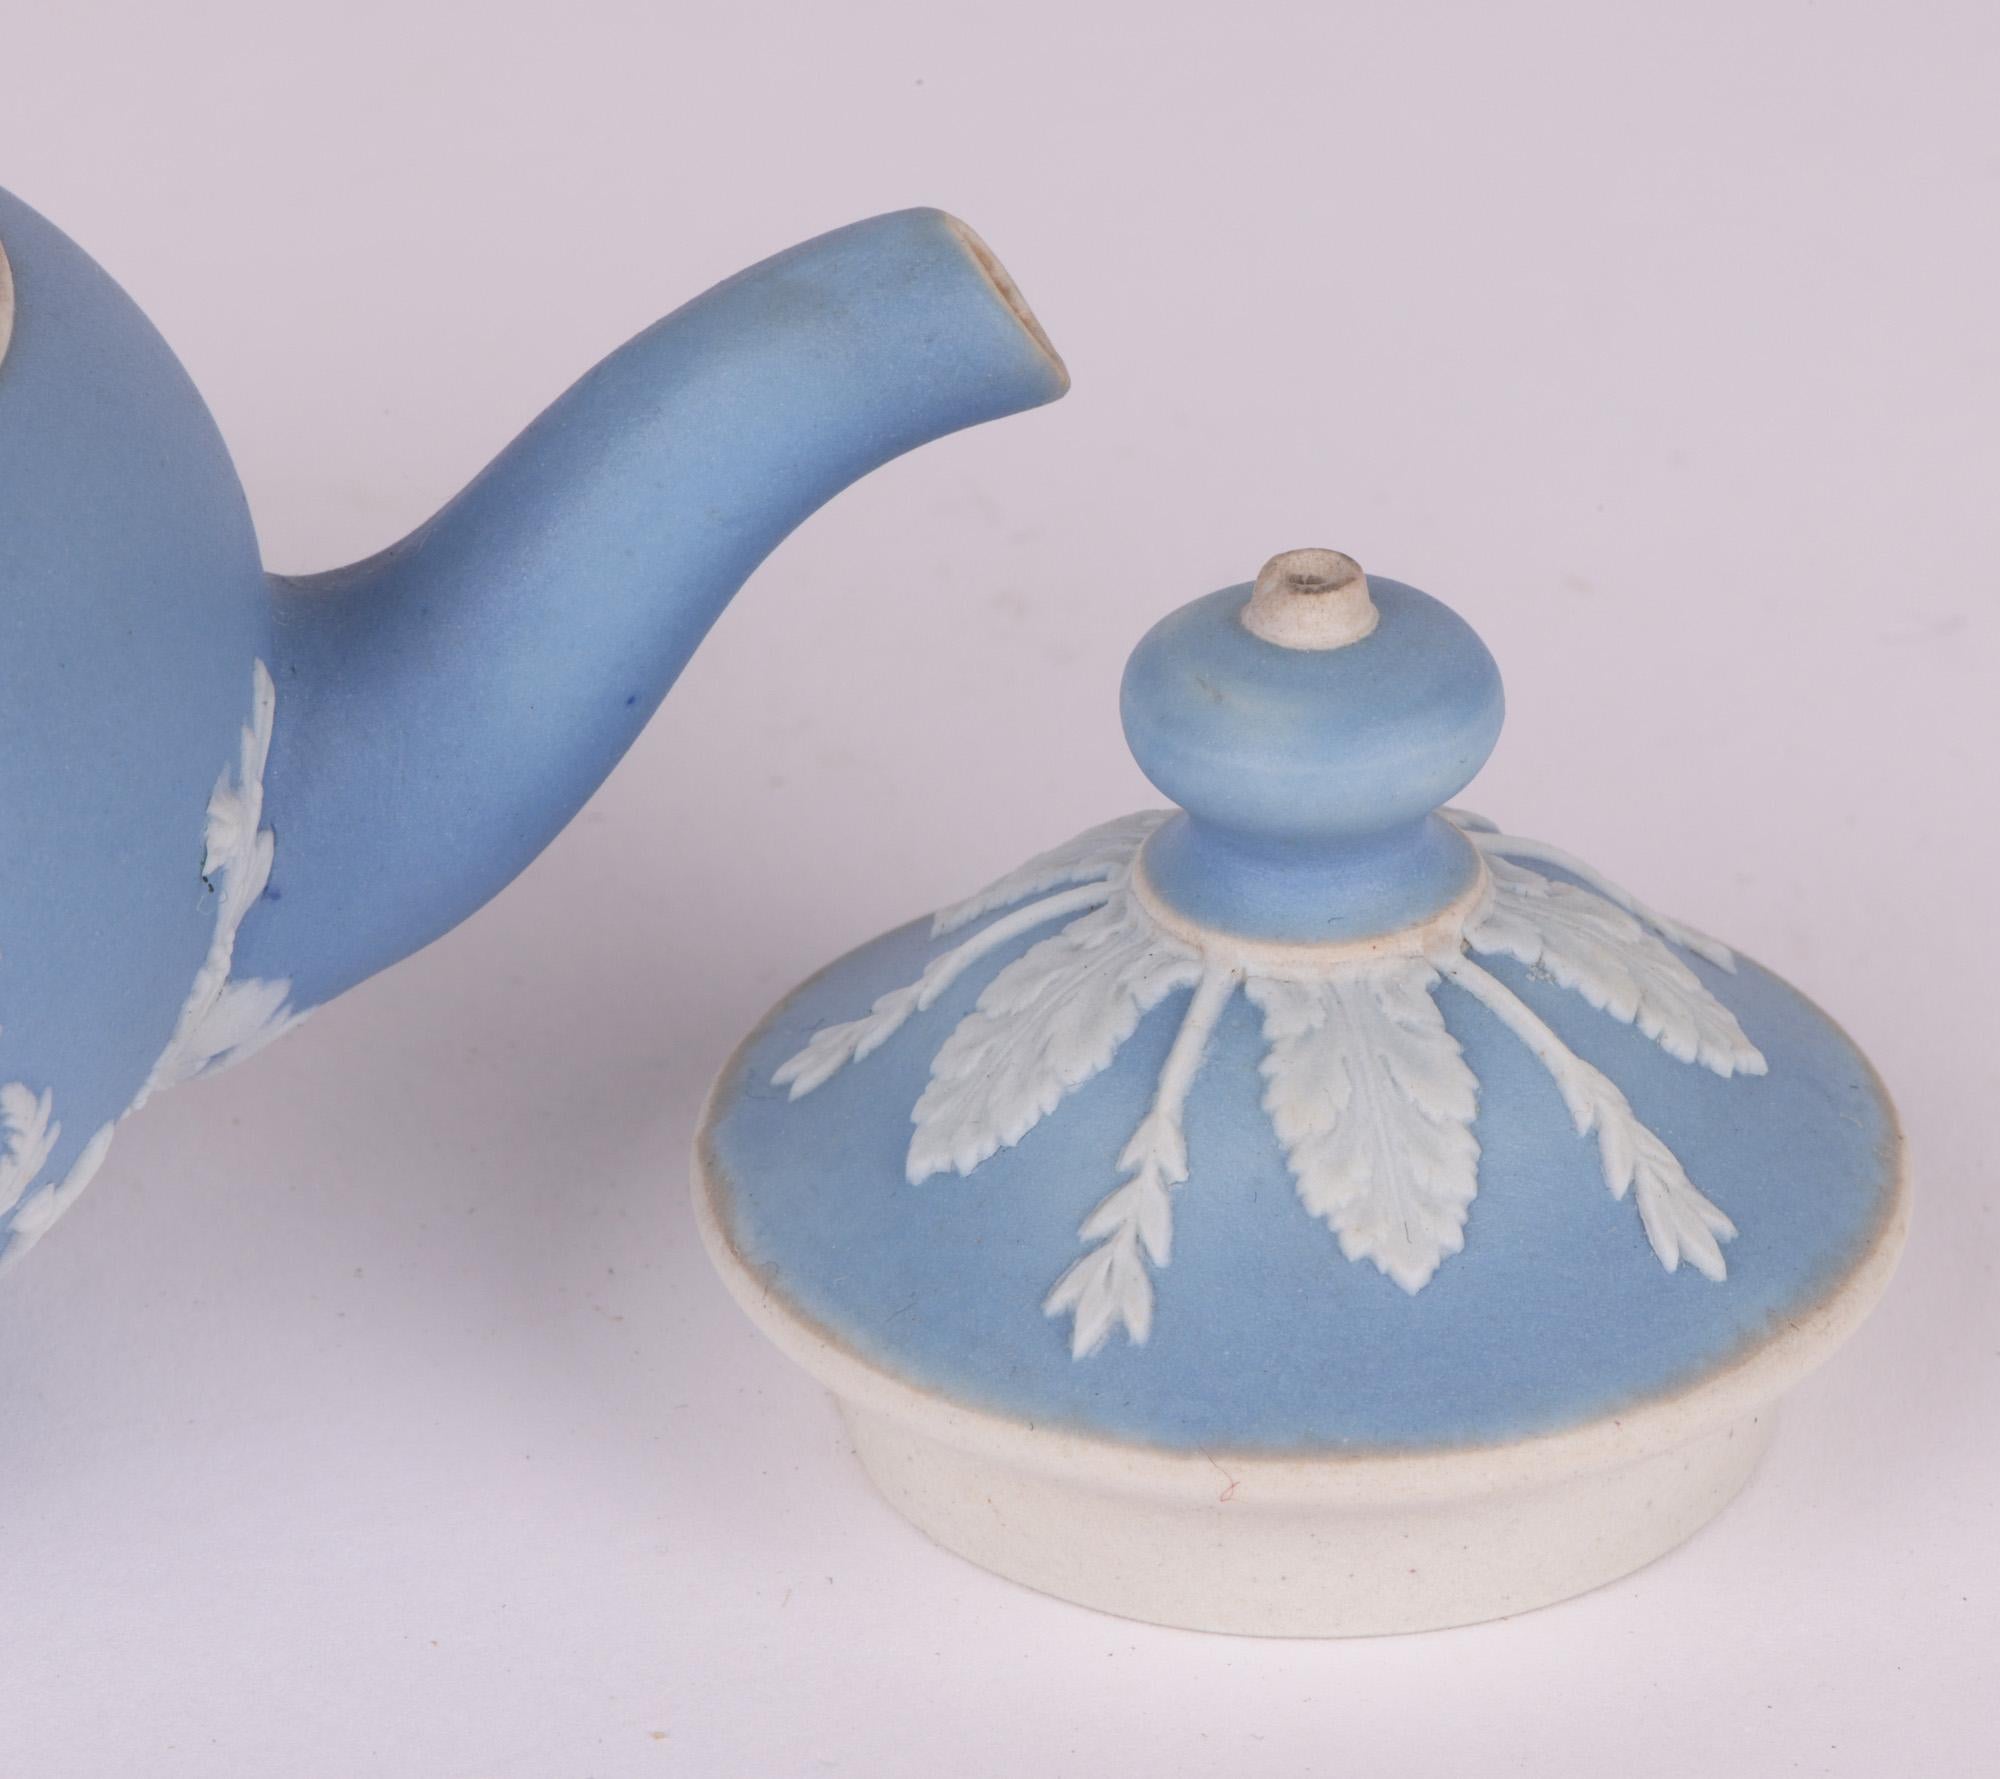 Wedgwood Antique Blue Jasperware Miniature Teapot 1